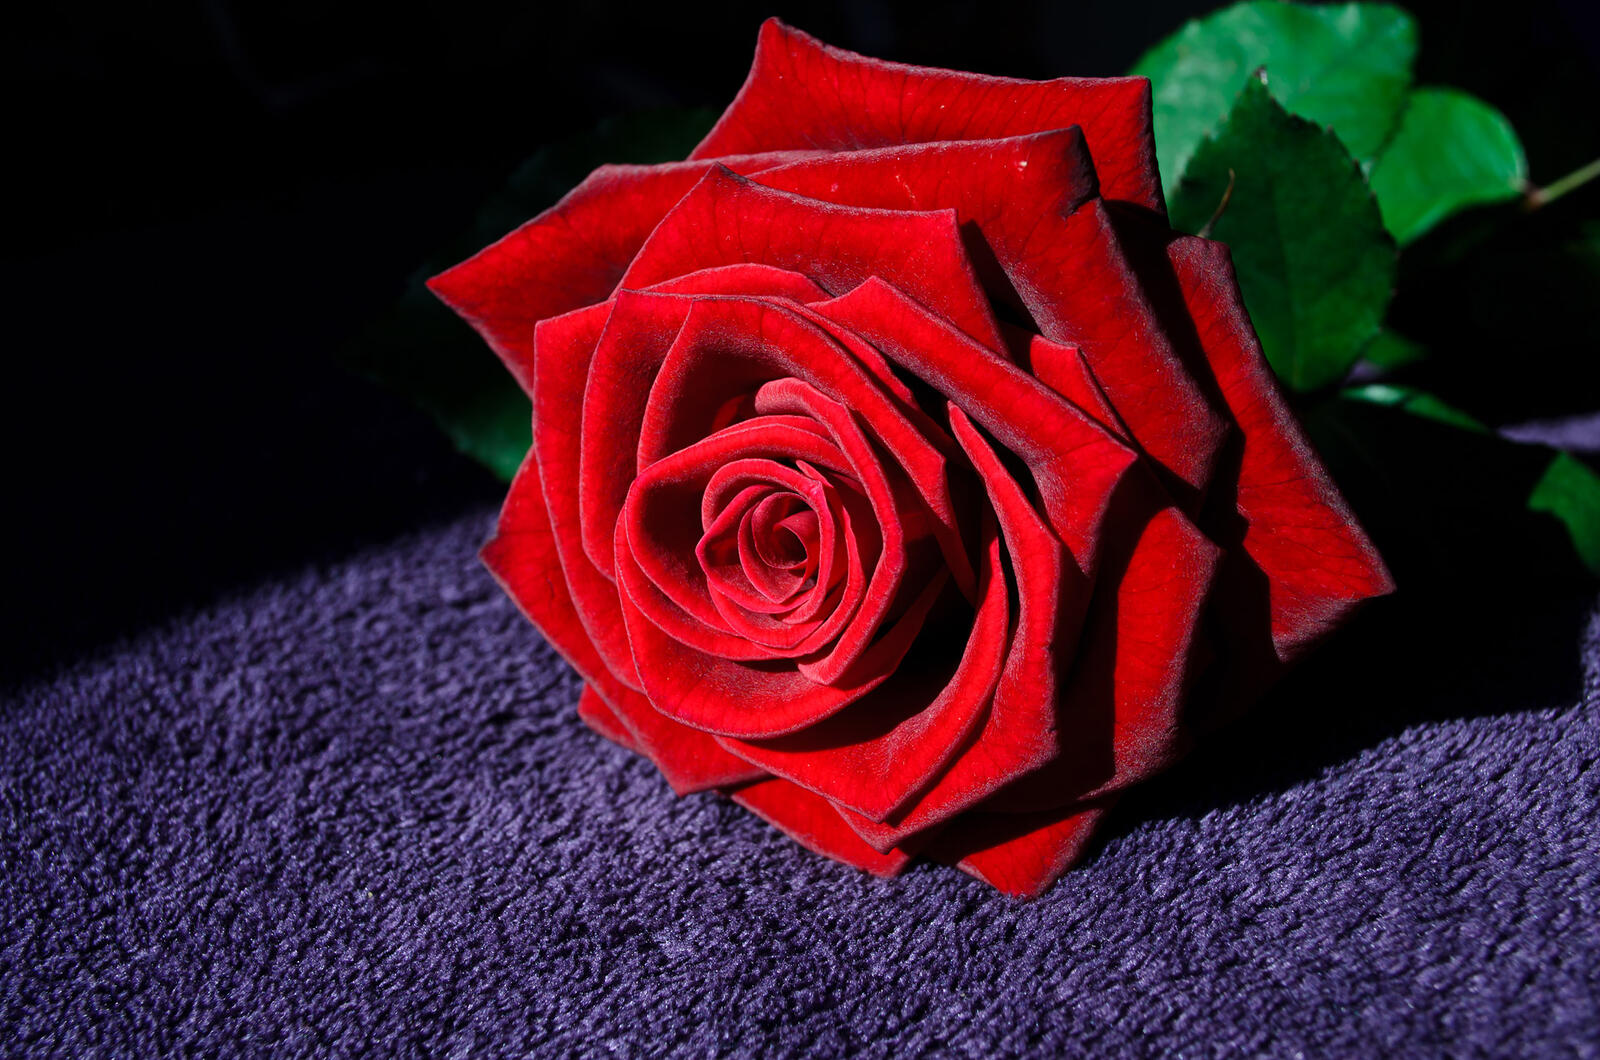 Обои роза цветочная композиция оригинал на рабочий стол